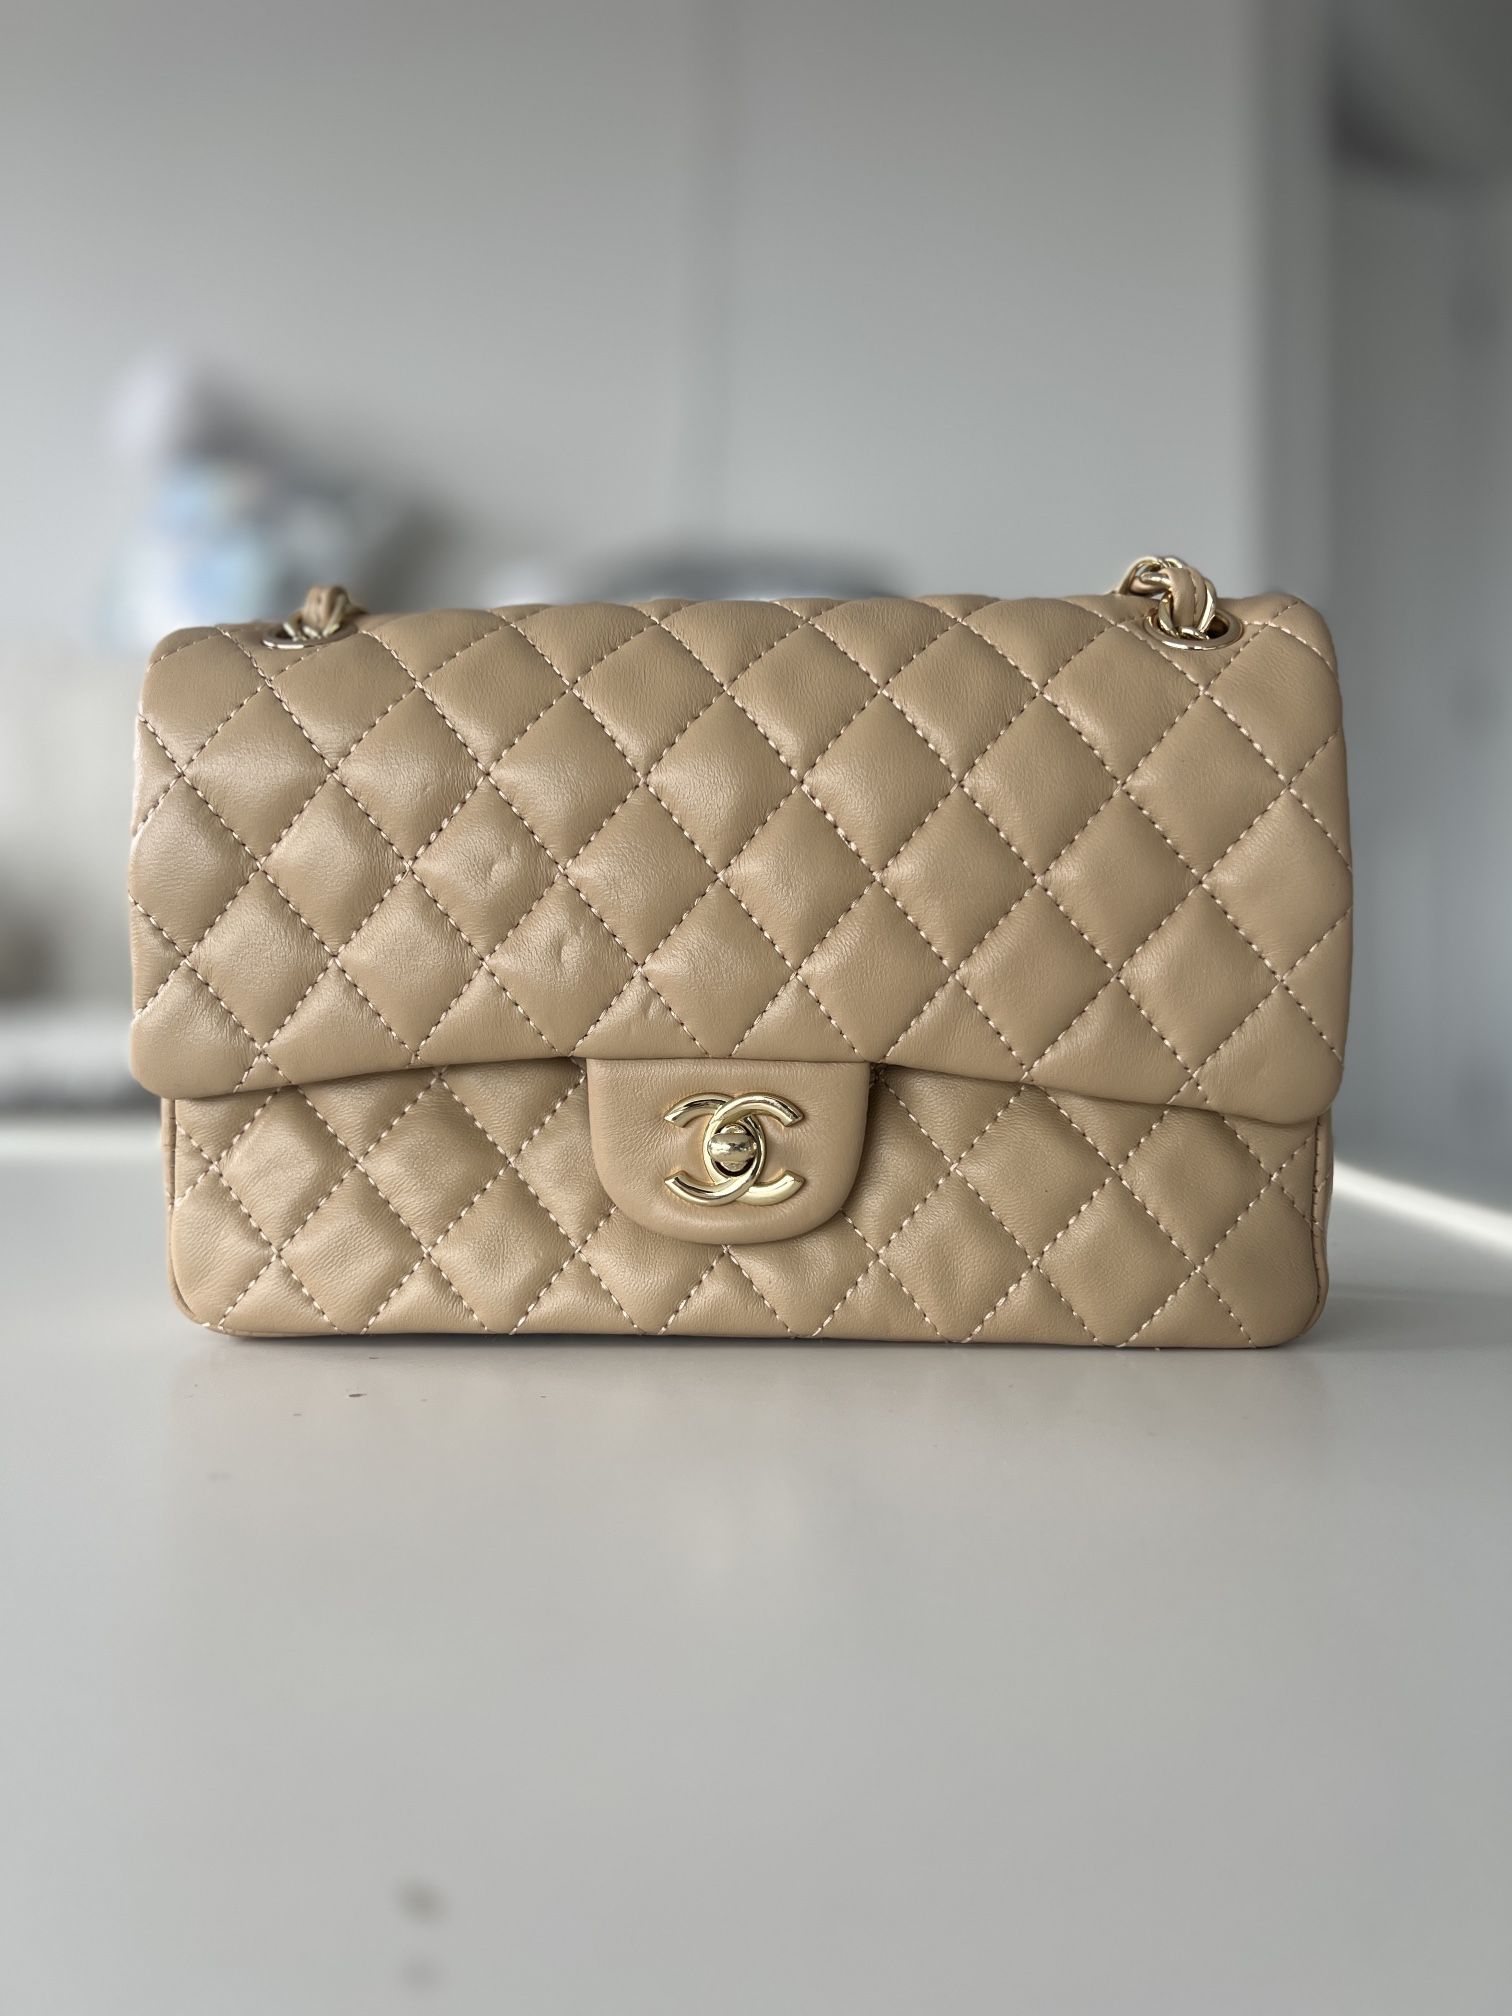 Chanel classic Leader Handbag 